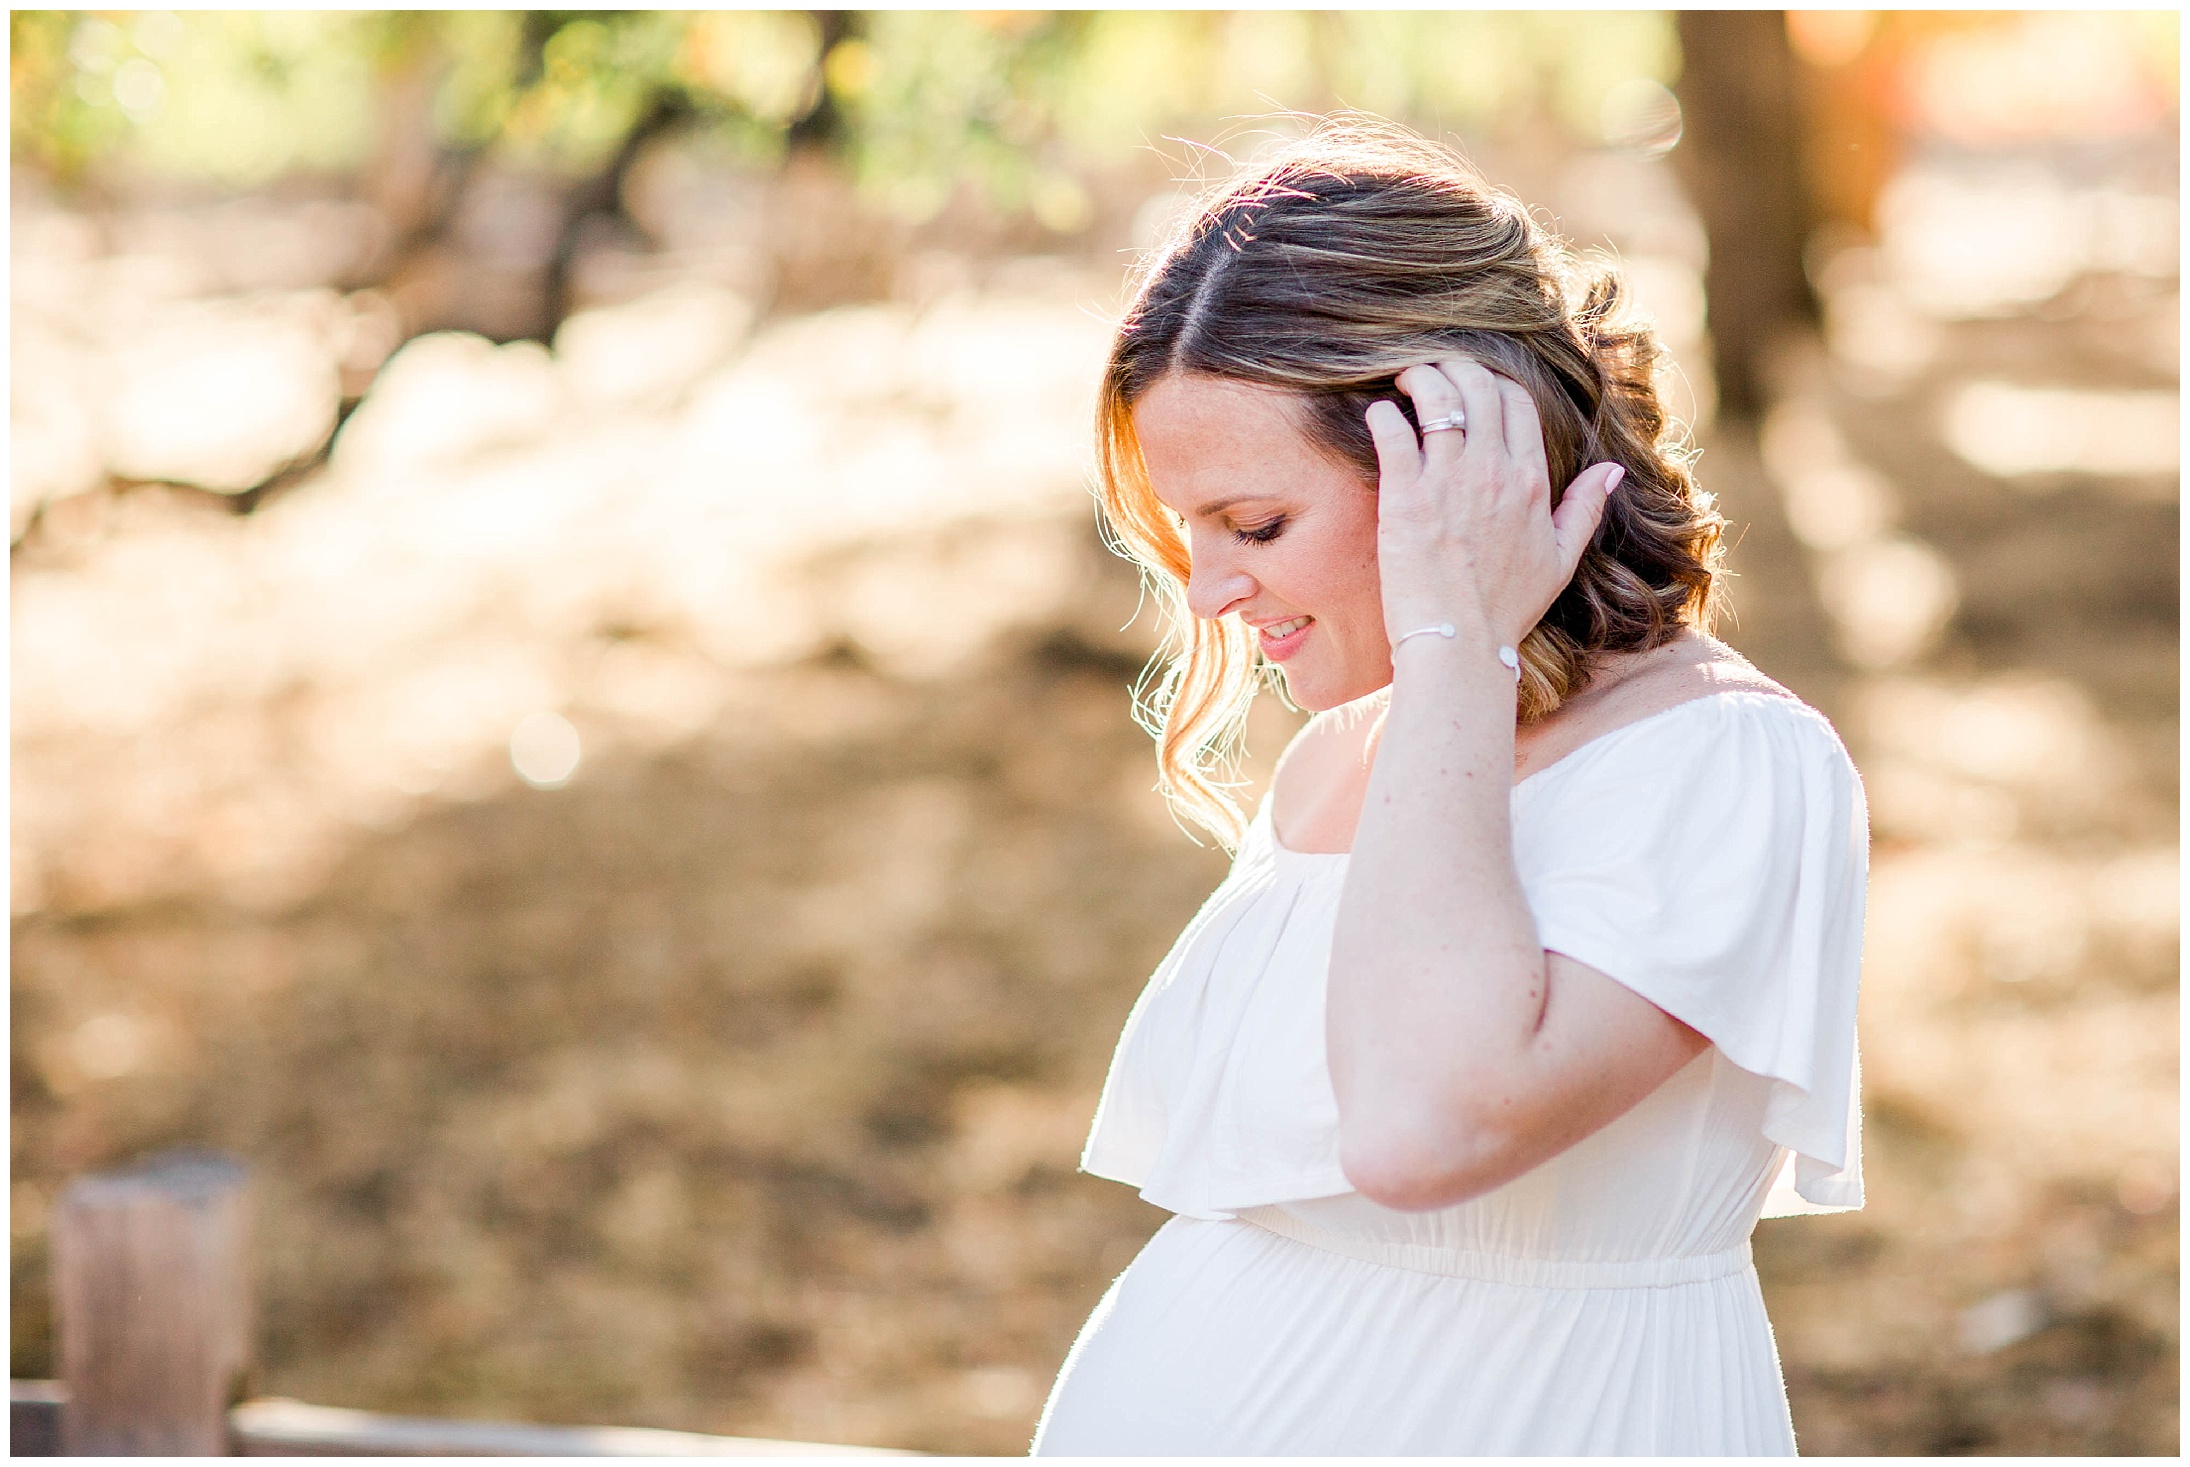 Bidwell Park Chico California Maternity Family White Dress,